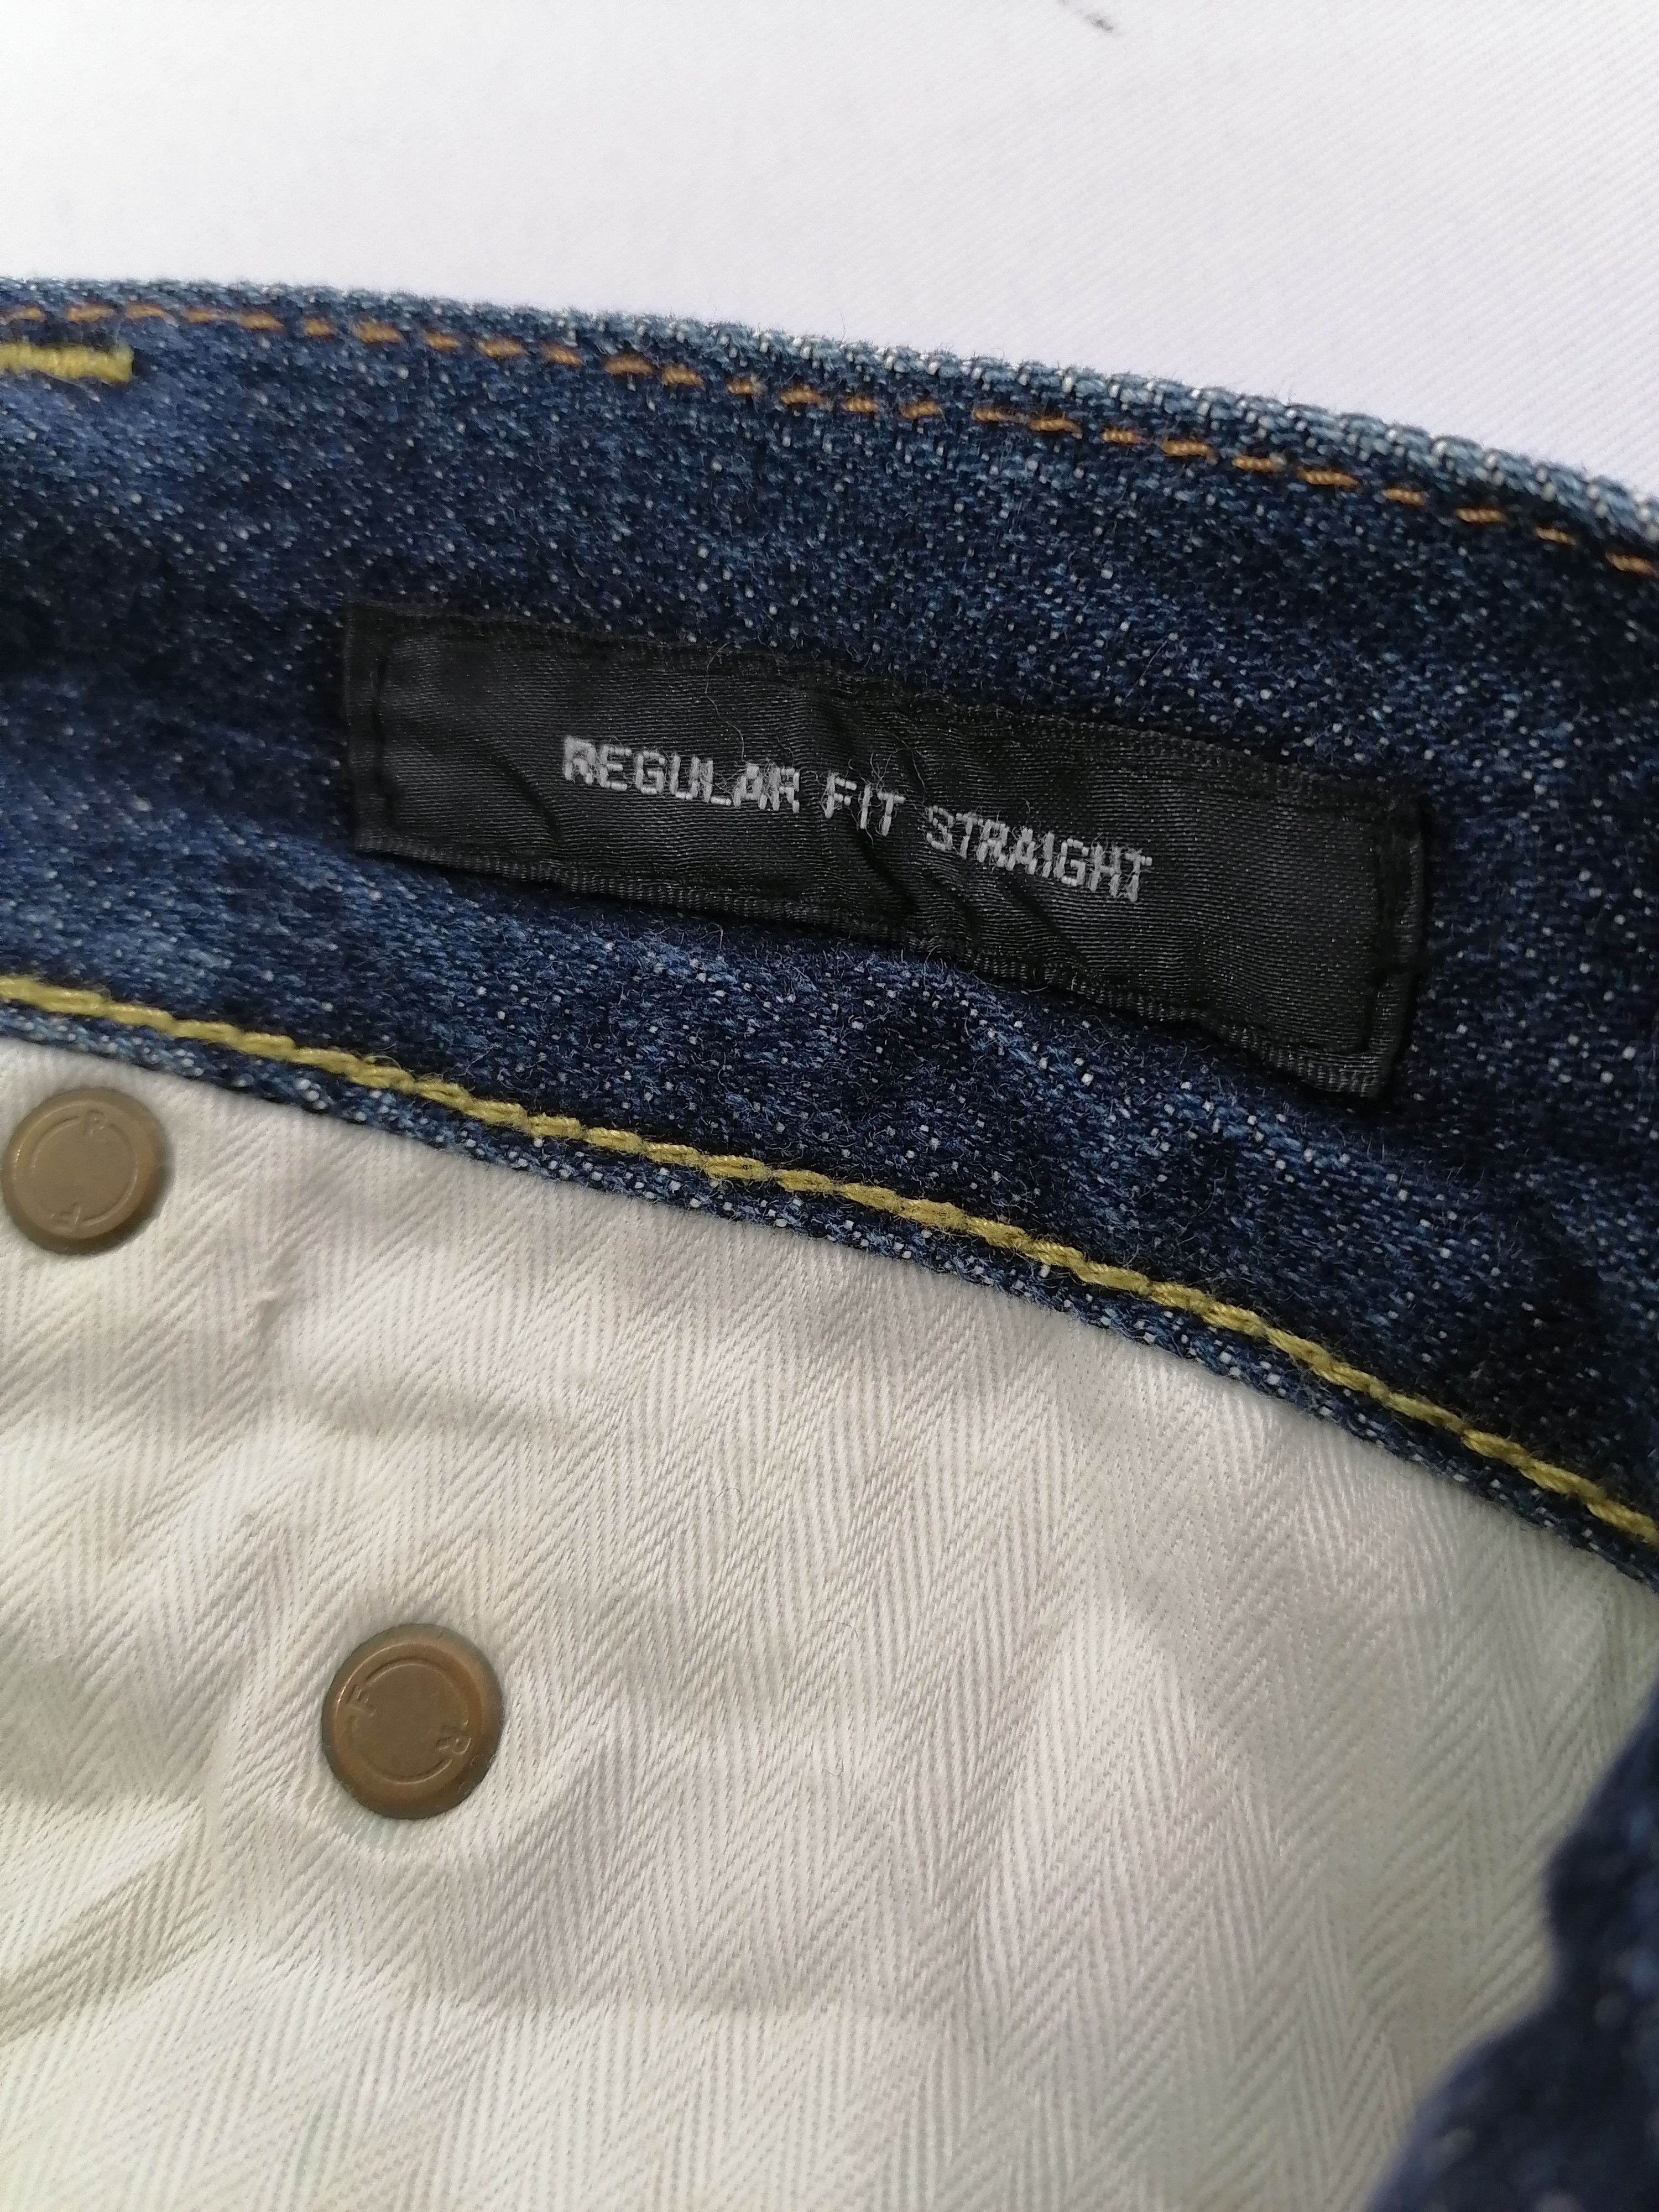 Uniqlo Uniqlo Regular Fit Straight Selvedge Denim Jeans Size US 32 / EU 48 - 9 Thumbnail